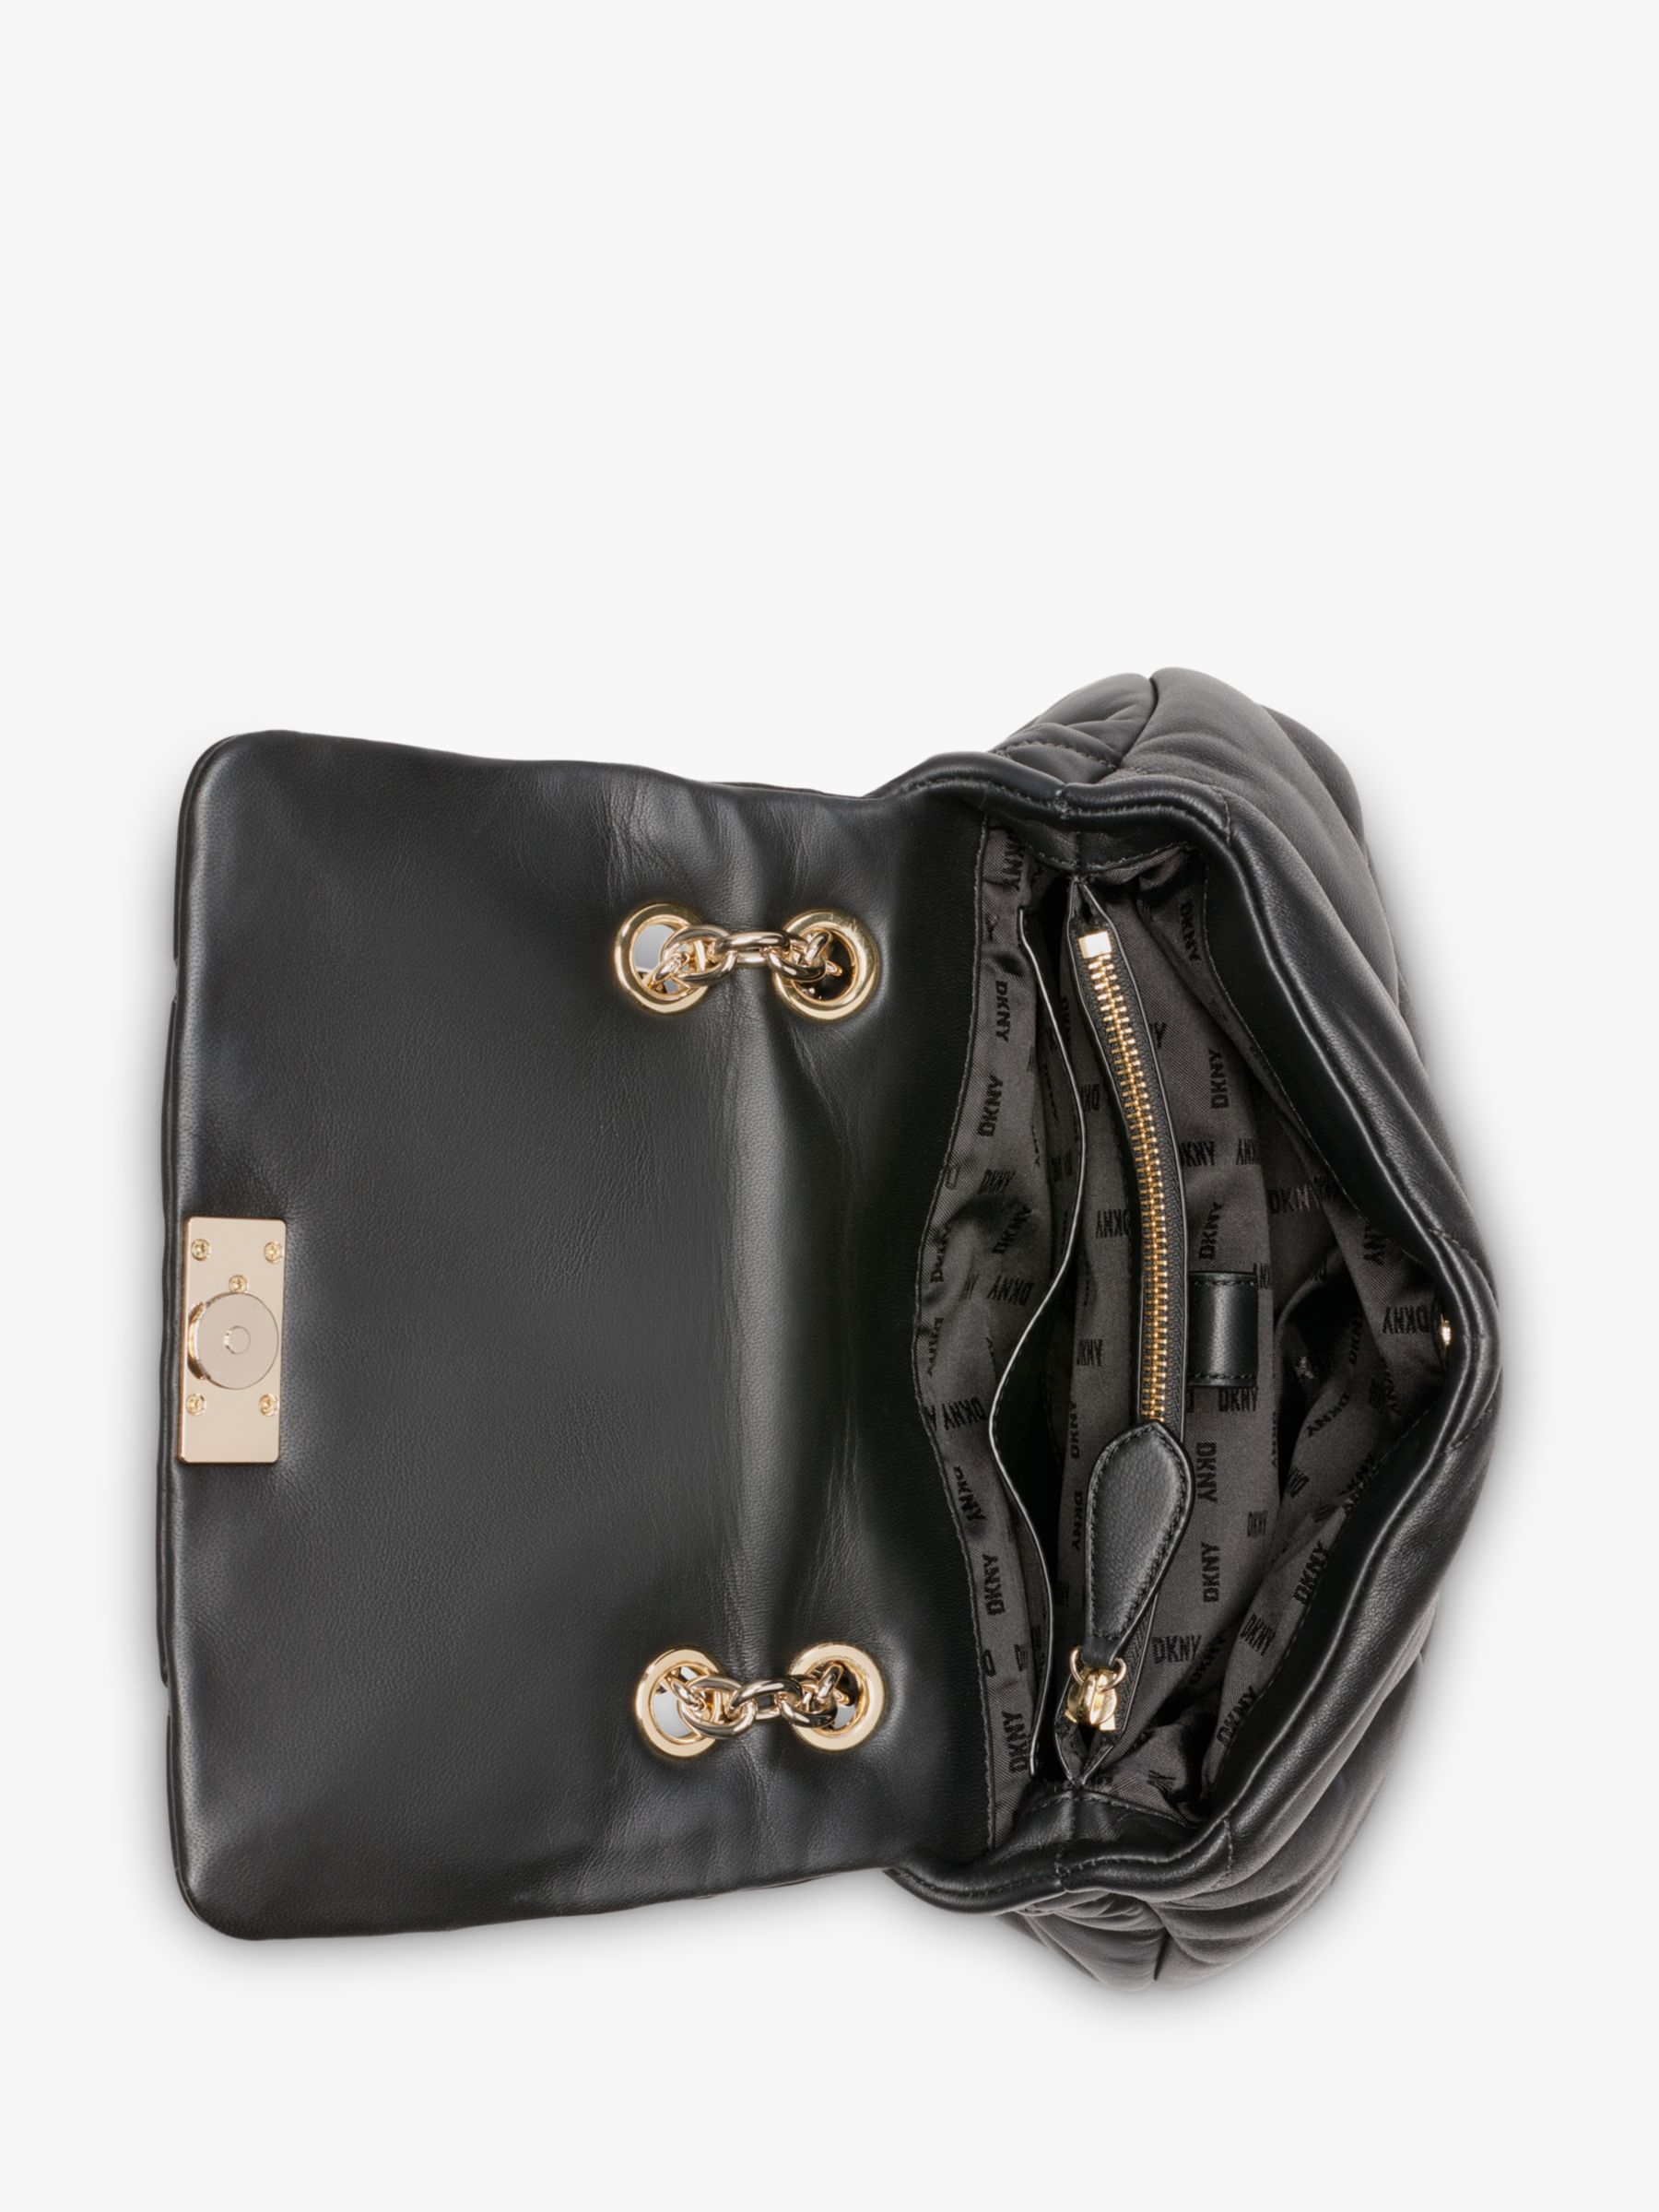 Buy DKNY Red Hook Leather Crossbody Bag, Black/Gold Online at johnlewis.com